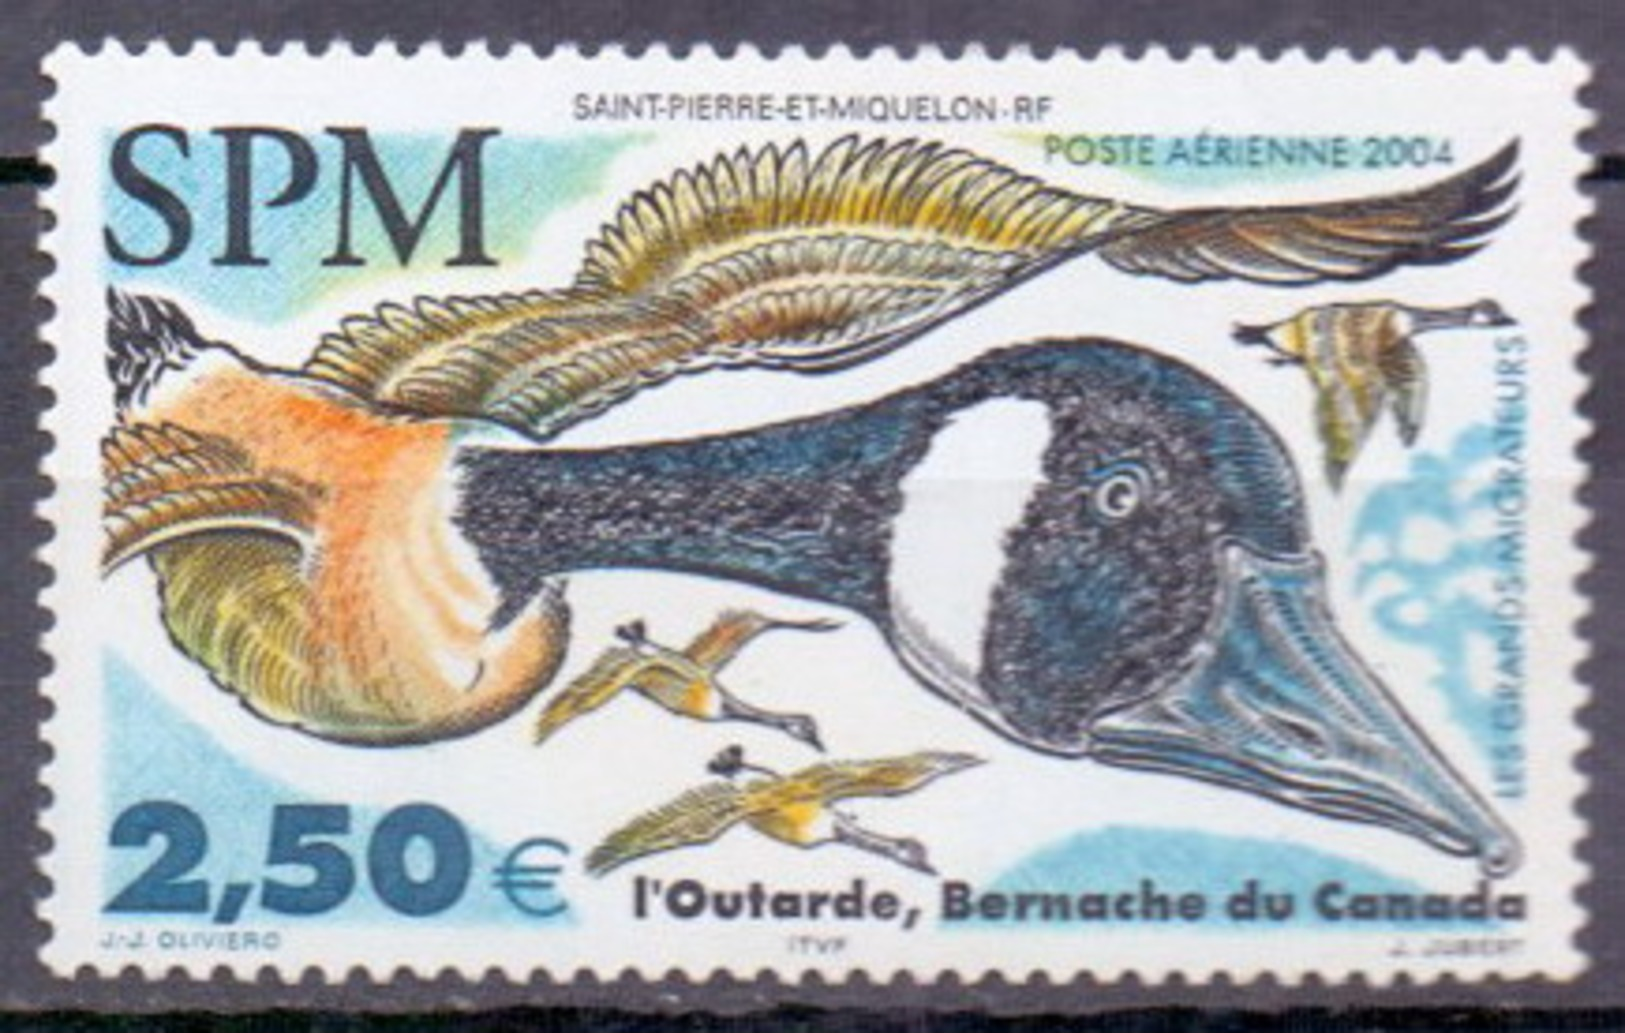 Saint Pierre And Miquelon (SPM) 2004 Migratory Birds, Duck, Goose (1v) MNH (M-419) - Geese